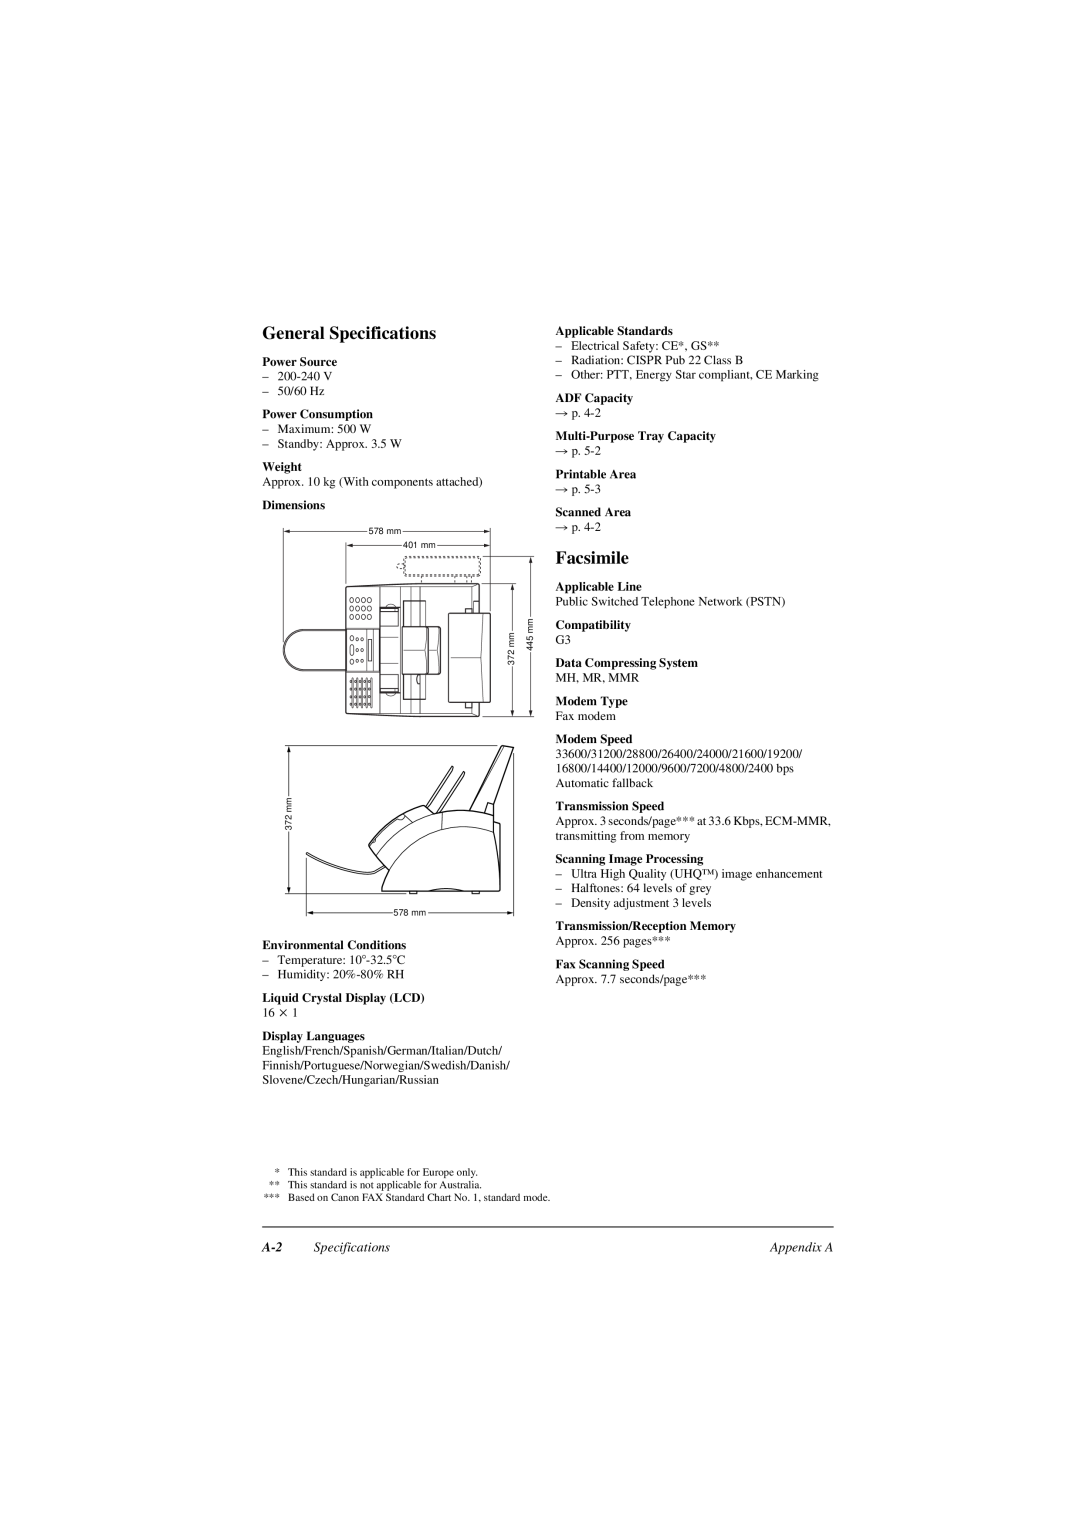 Canon L290, L240 manual General Specifications, Facsimile, Appendix A 